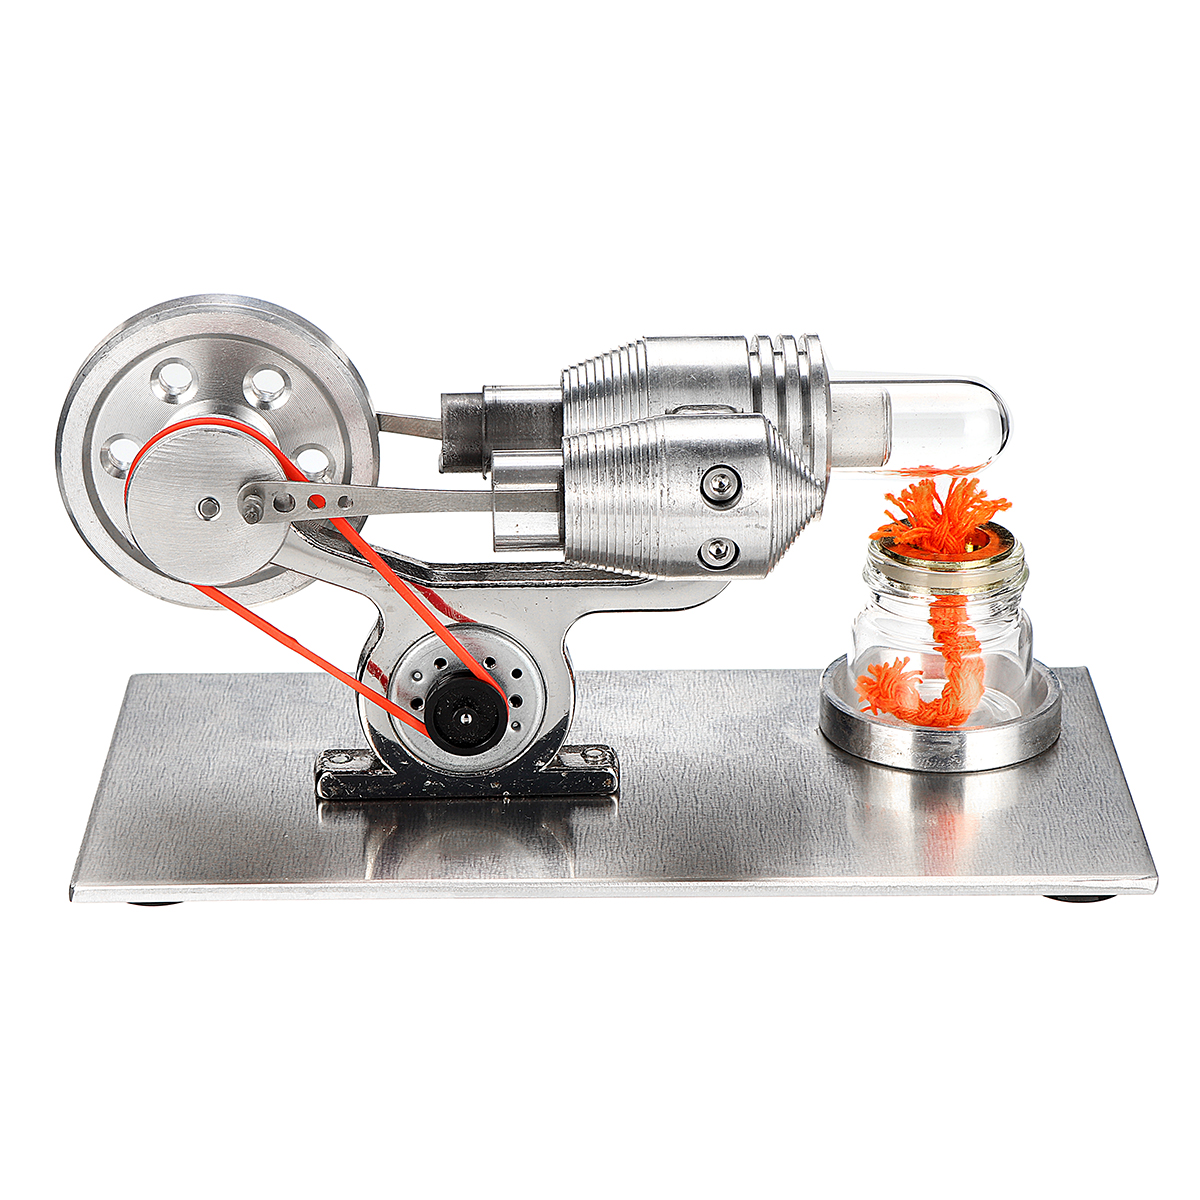 STEM Stainless Mini Hot Air Stirling Engine Motor Model Educational Toy Kit 137